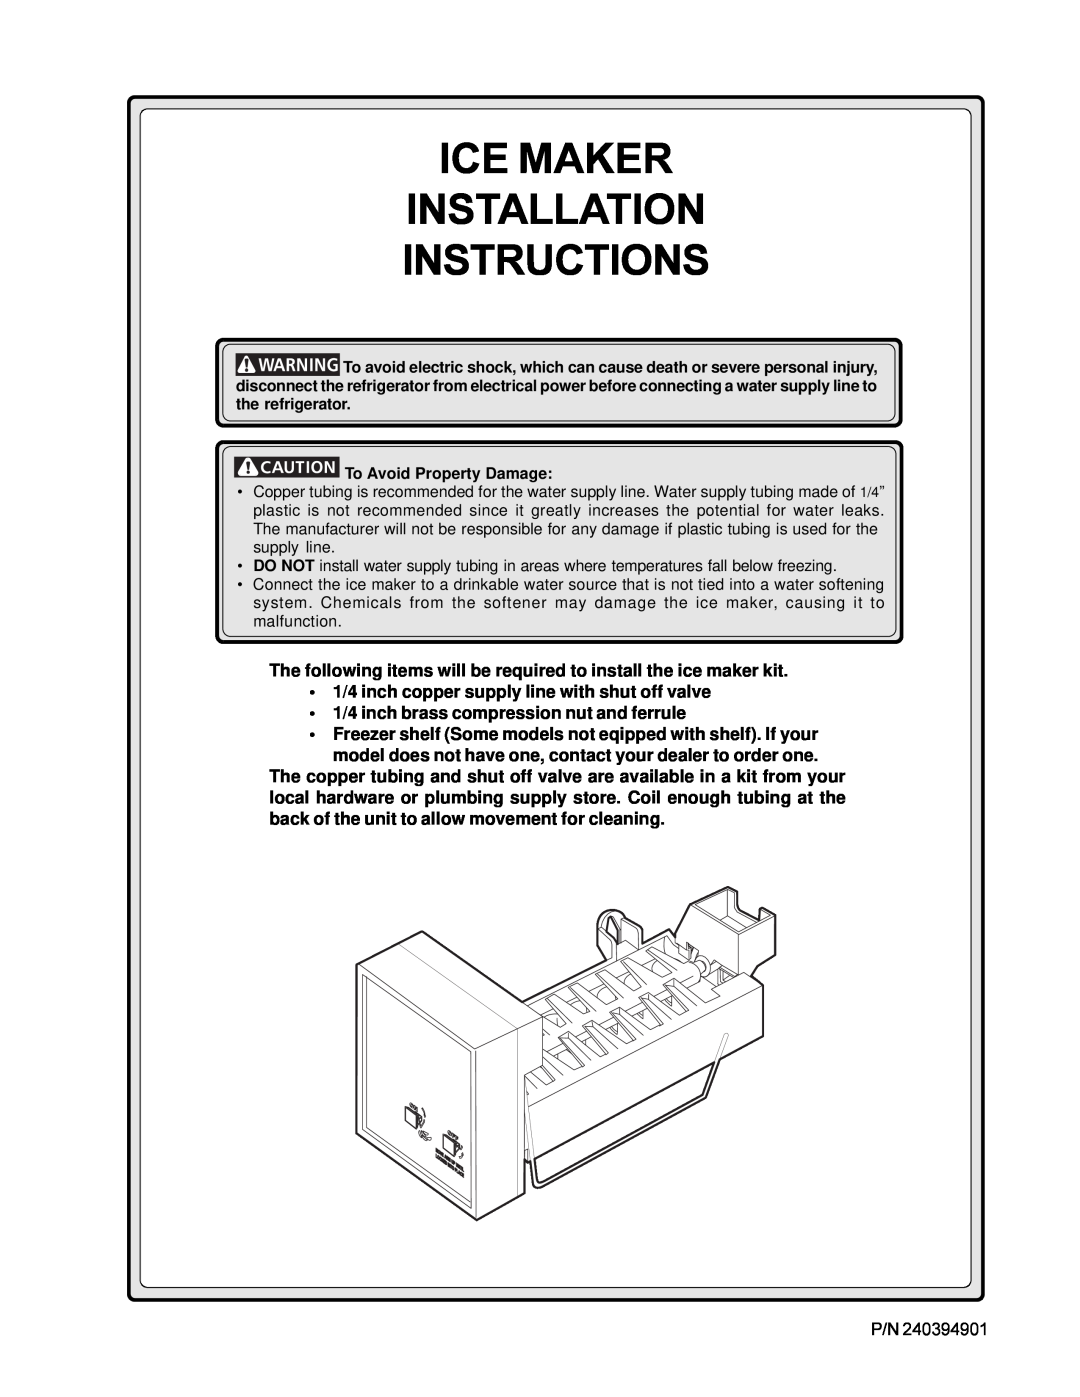 Frigidaire IM115 installation instructions Ice Maker Installation Instructions, 1/4 inch brass compression nut and ferrule 